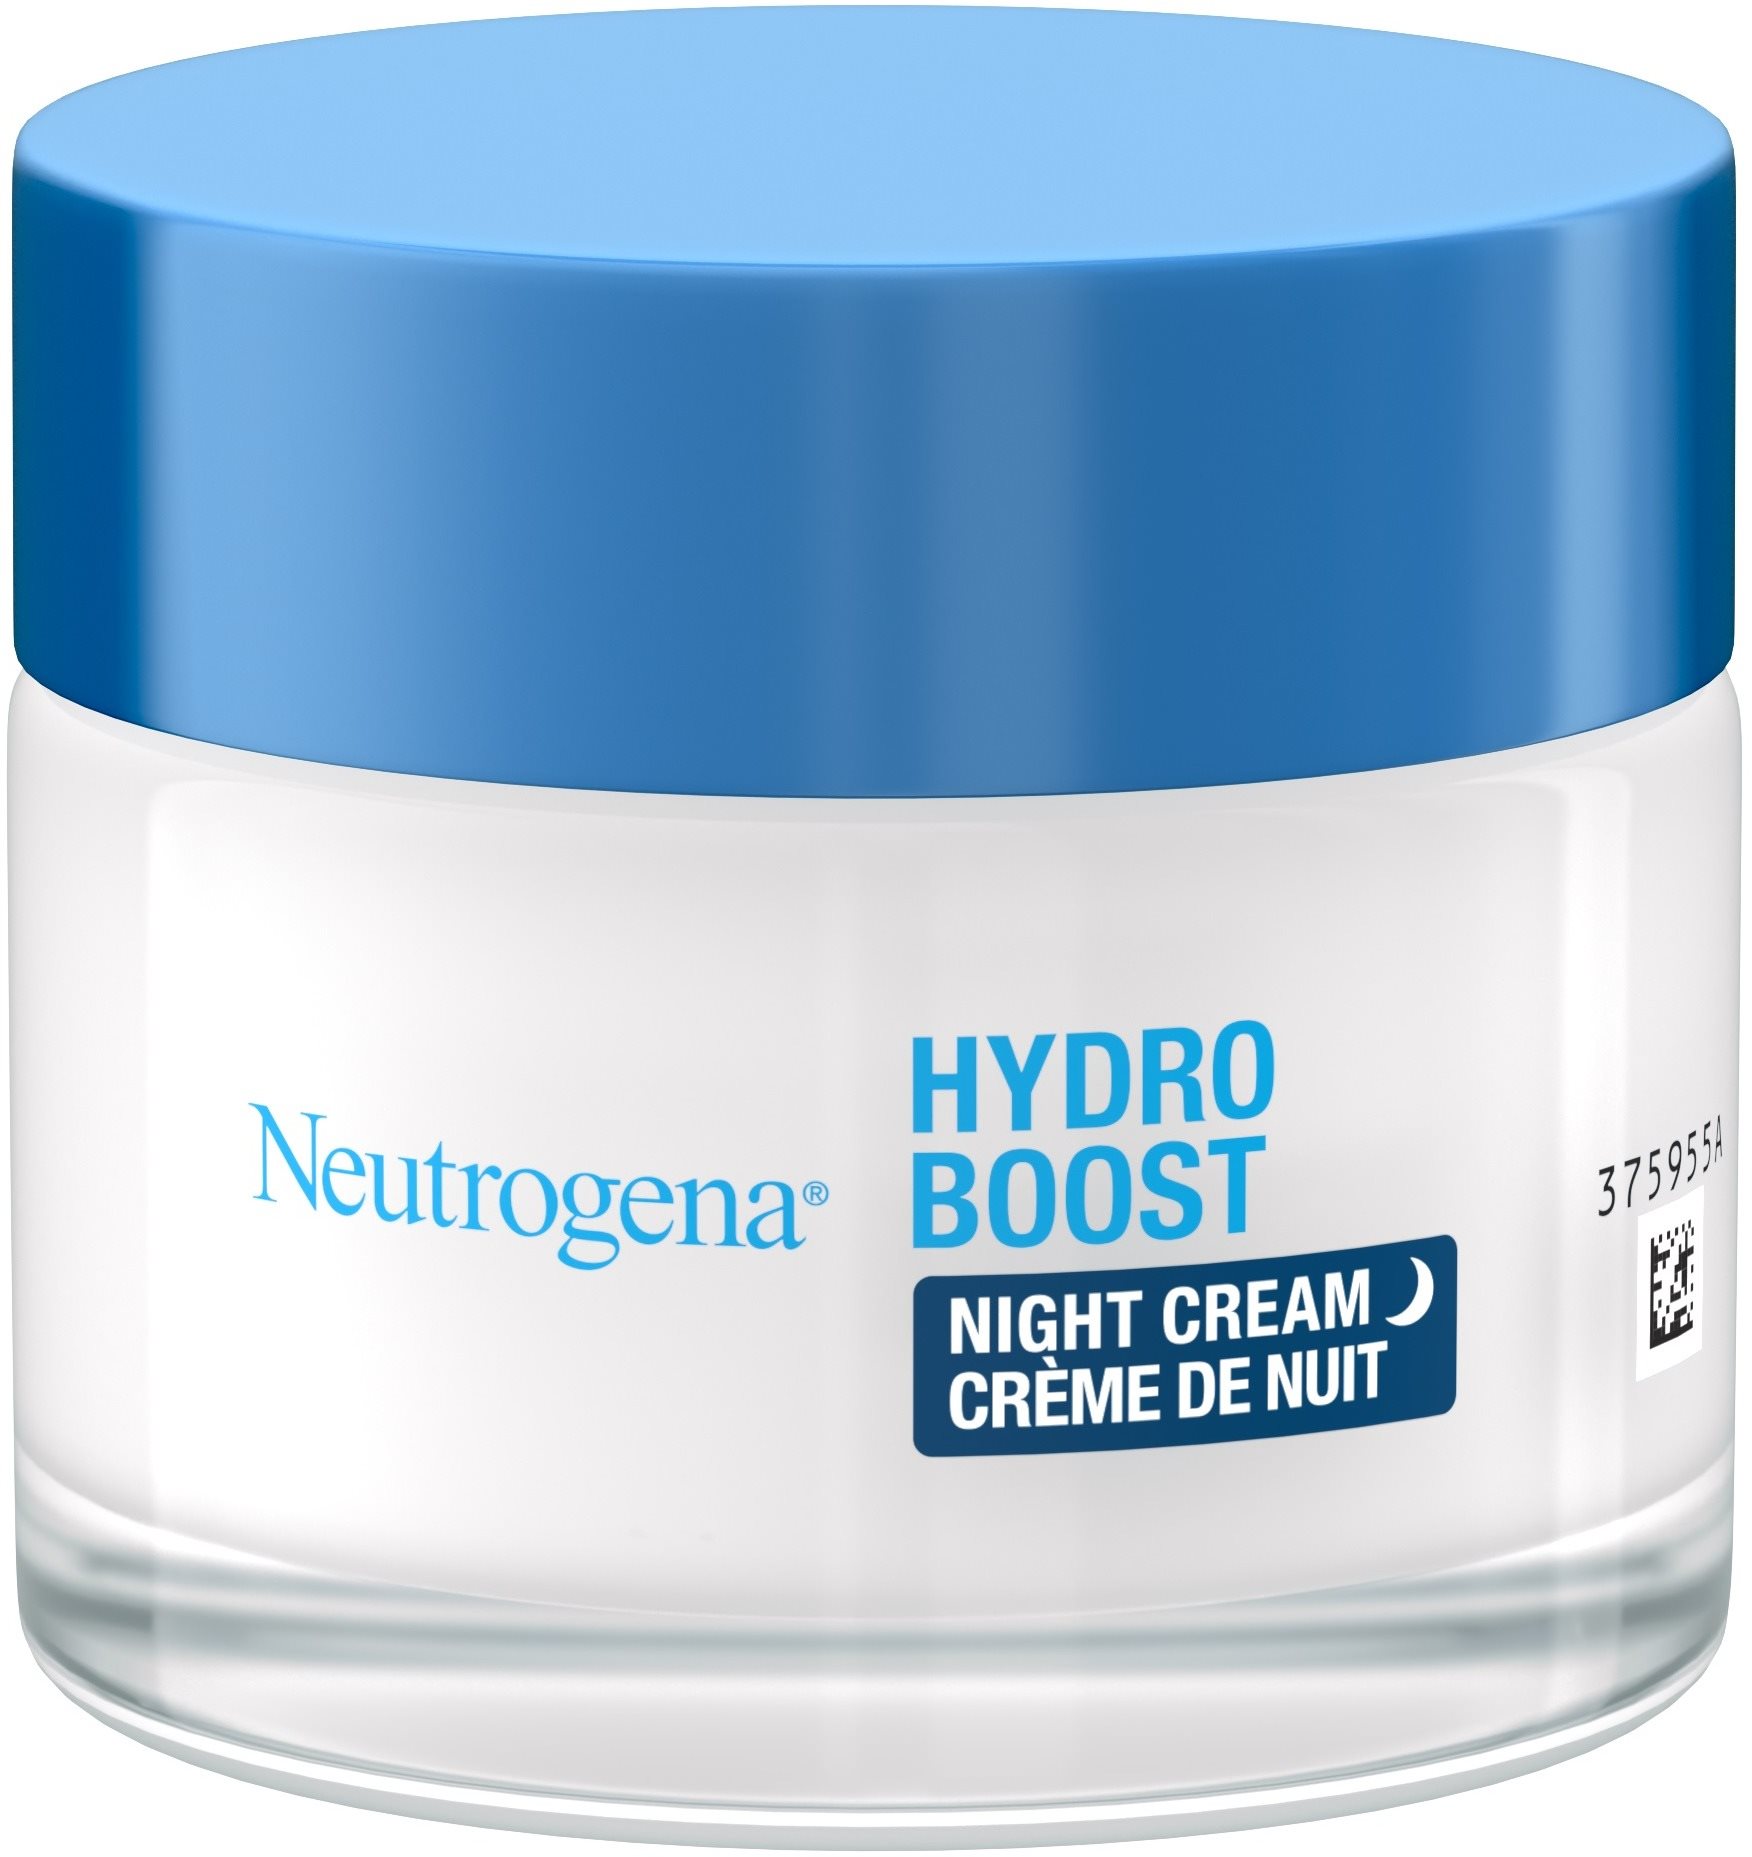 NEUTROGENA Hydro Boost Sleeping Cream 50 ml